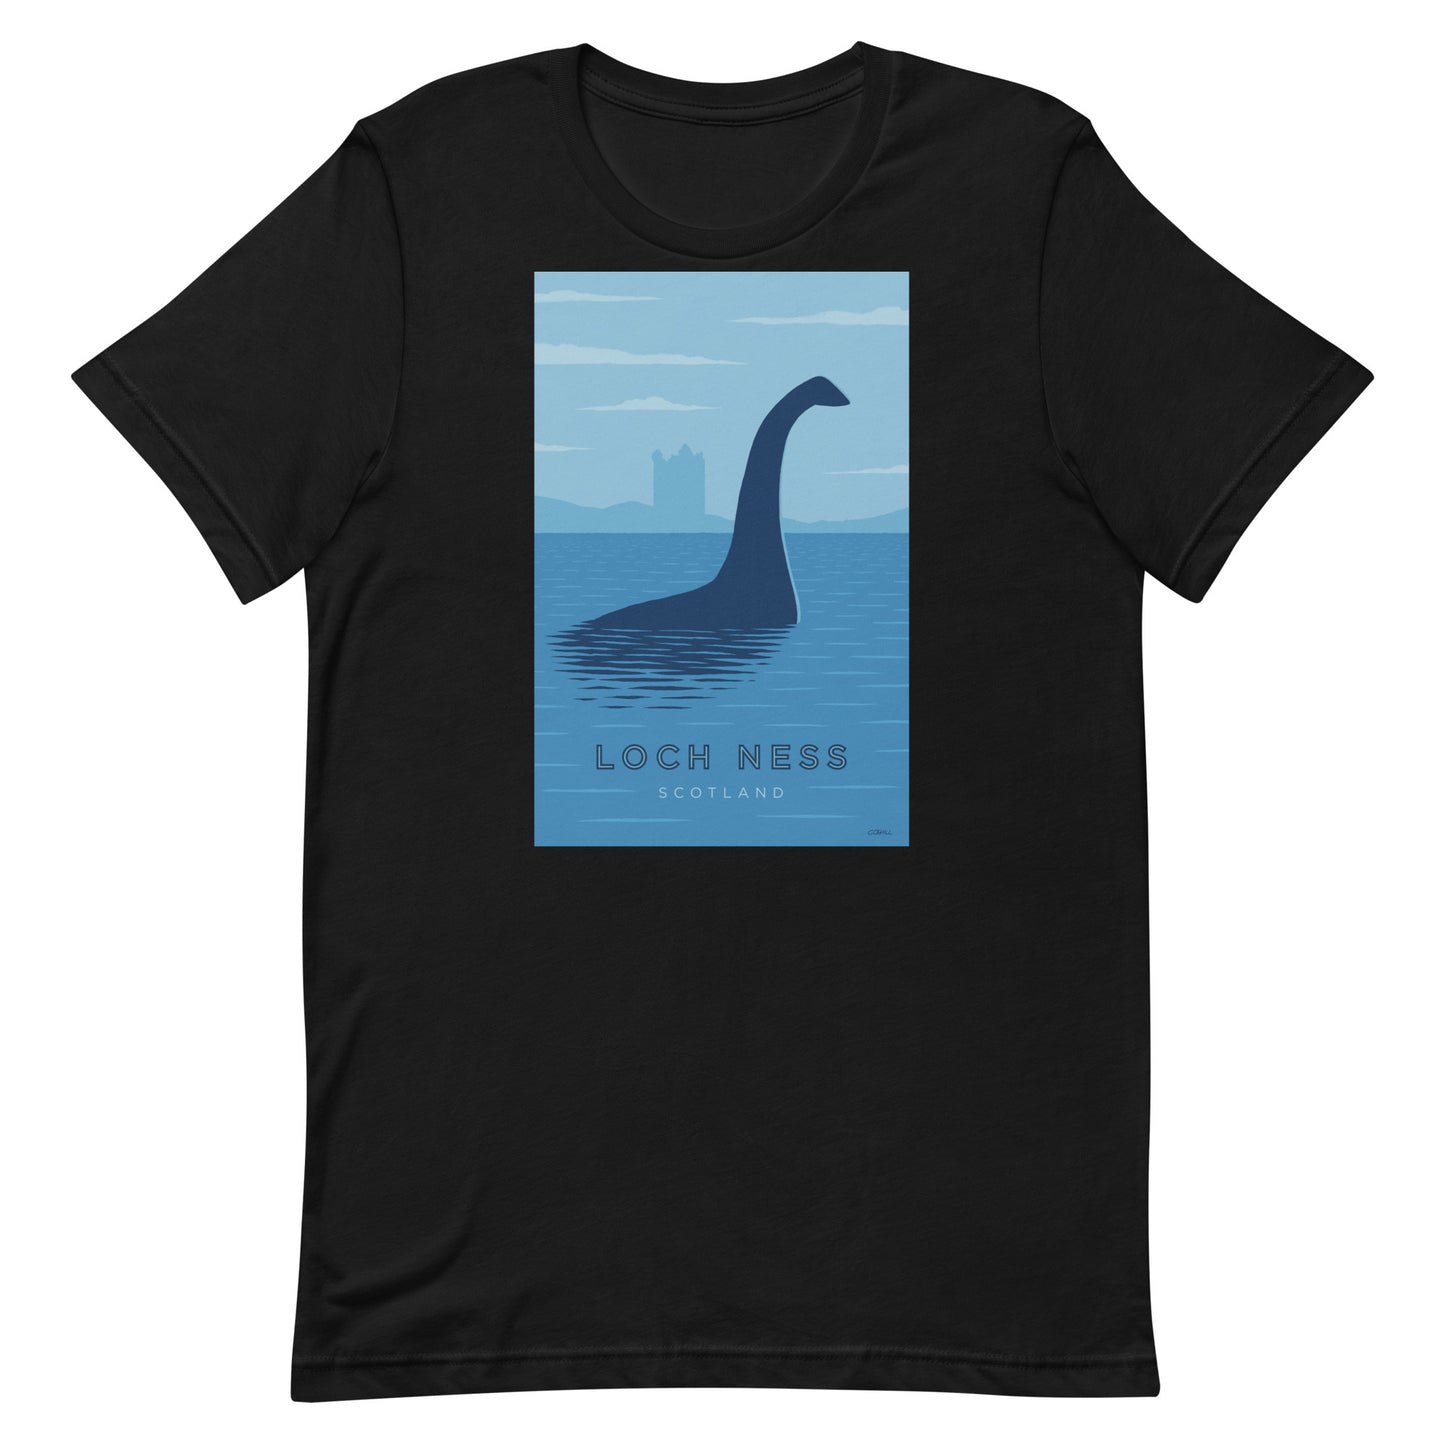 Loch Ness, Scotland Nessie travel poster t-shirt